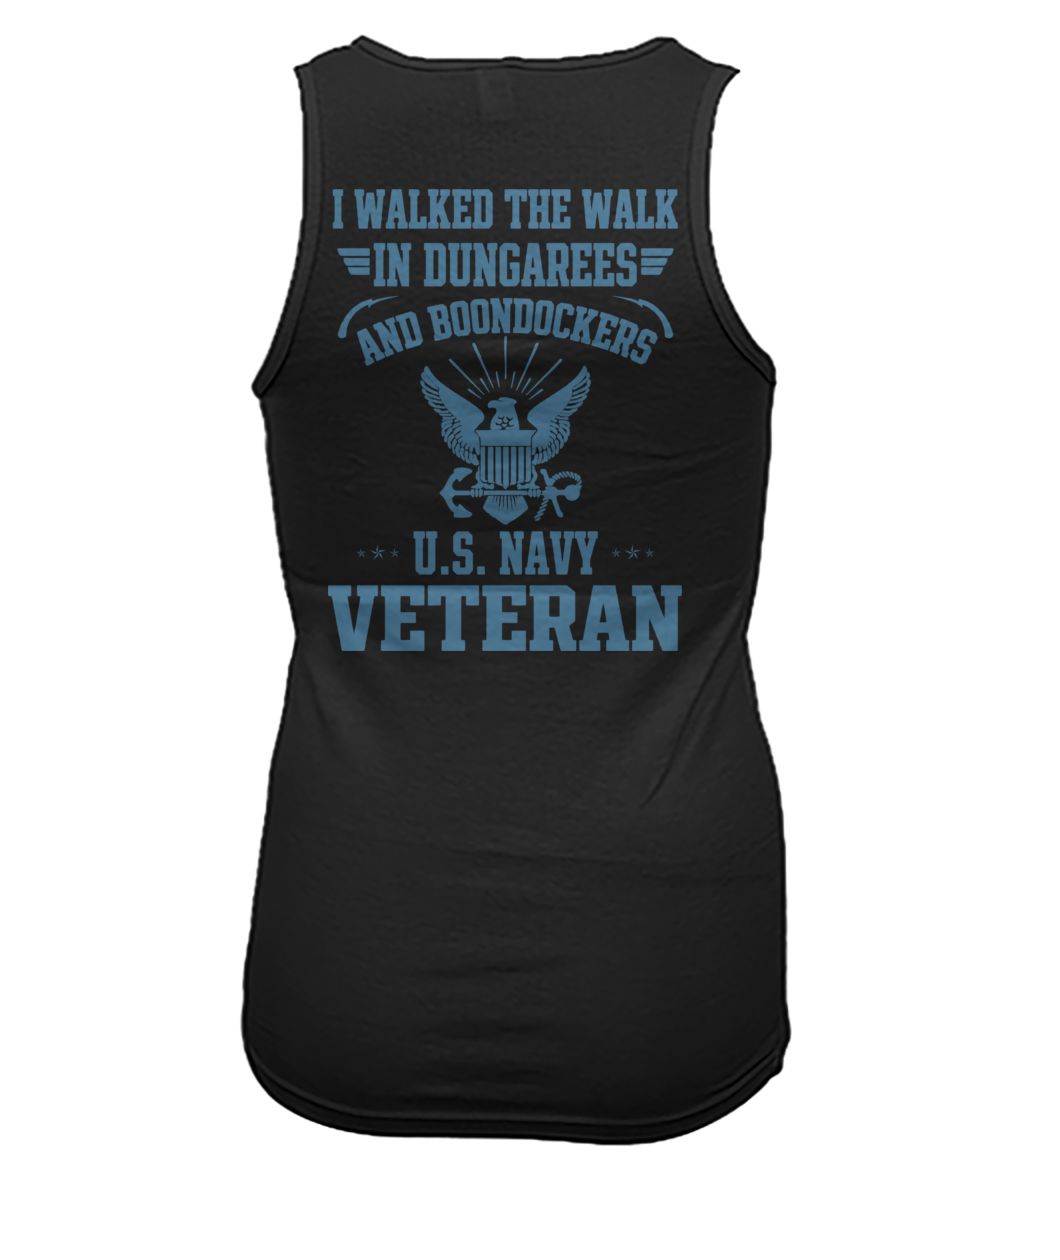 I walked the walk in dungarees and boondockers US navy veteran women's tank top